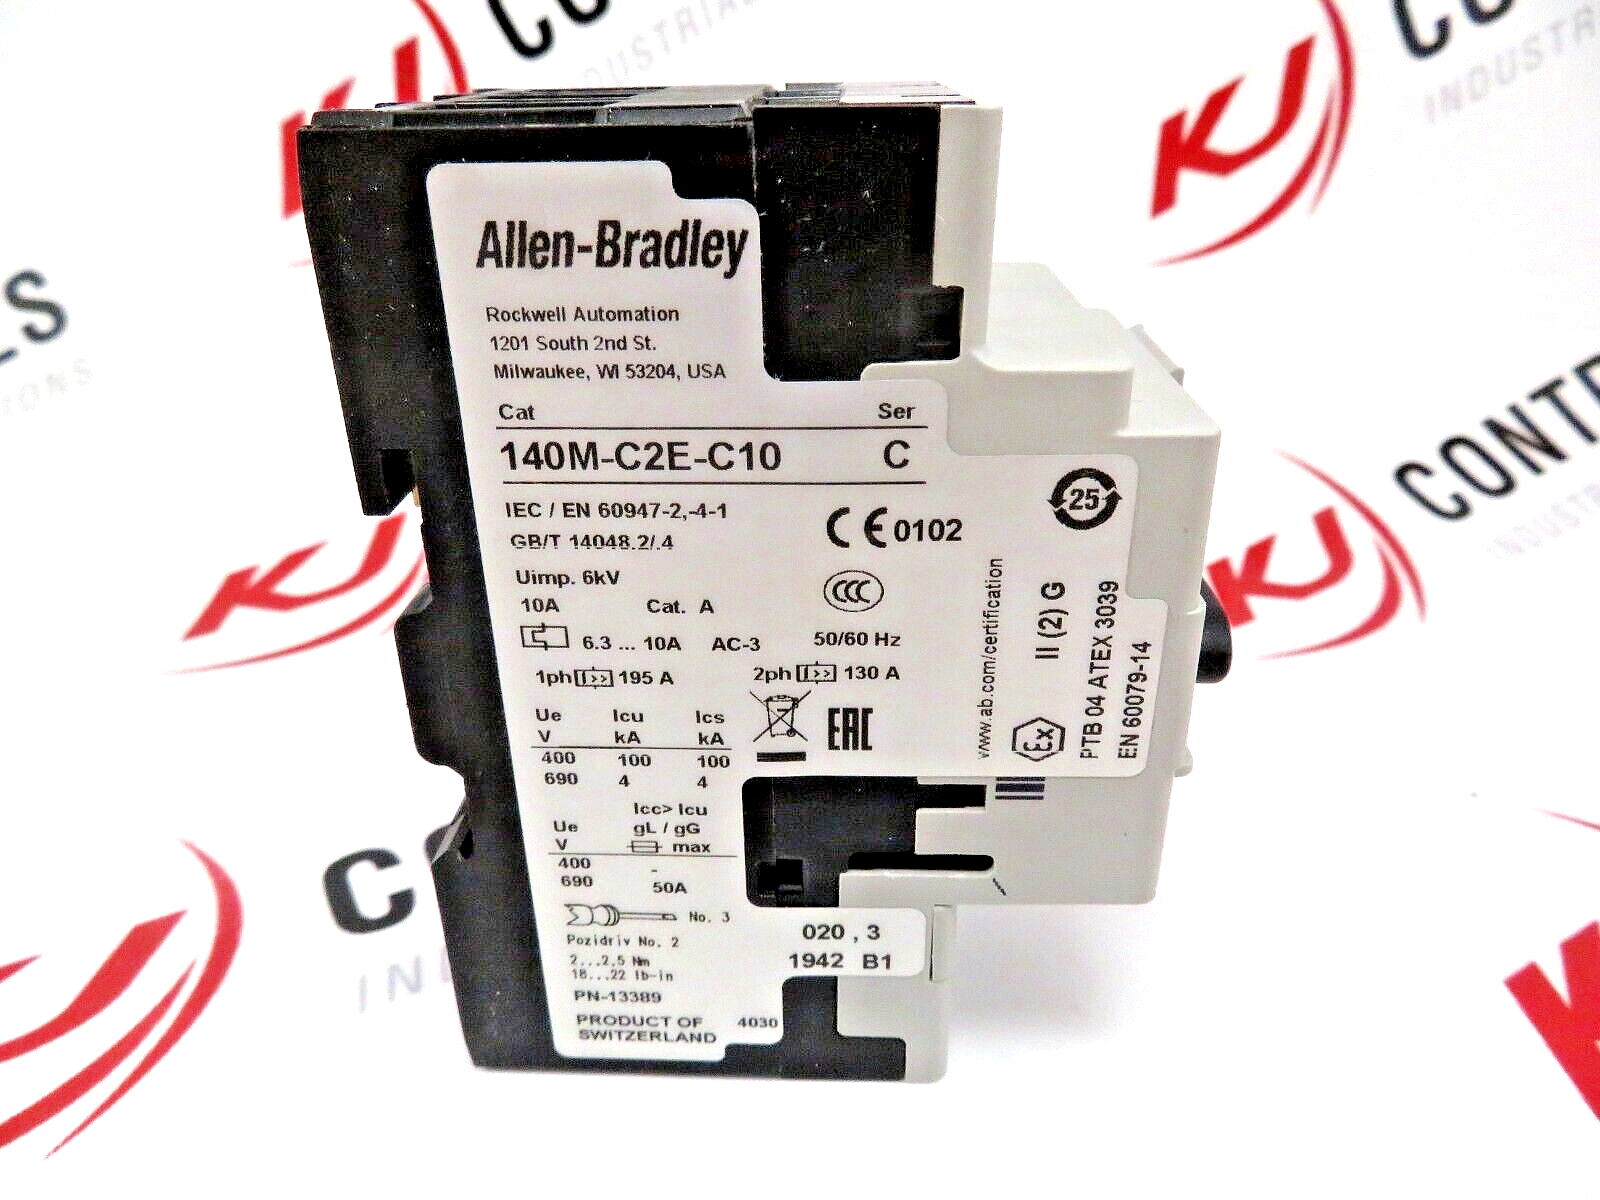 Allen-Bradley 140M-C2E-C10 Motor Protector Circuit Breaker